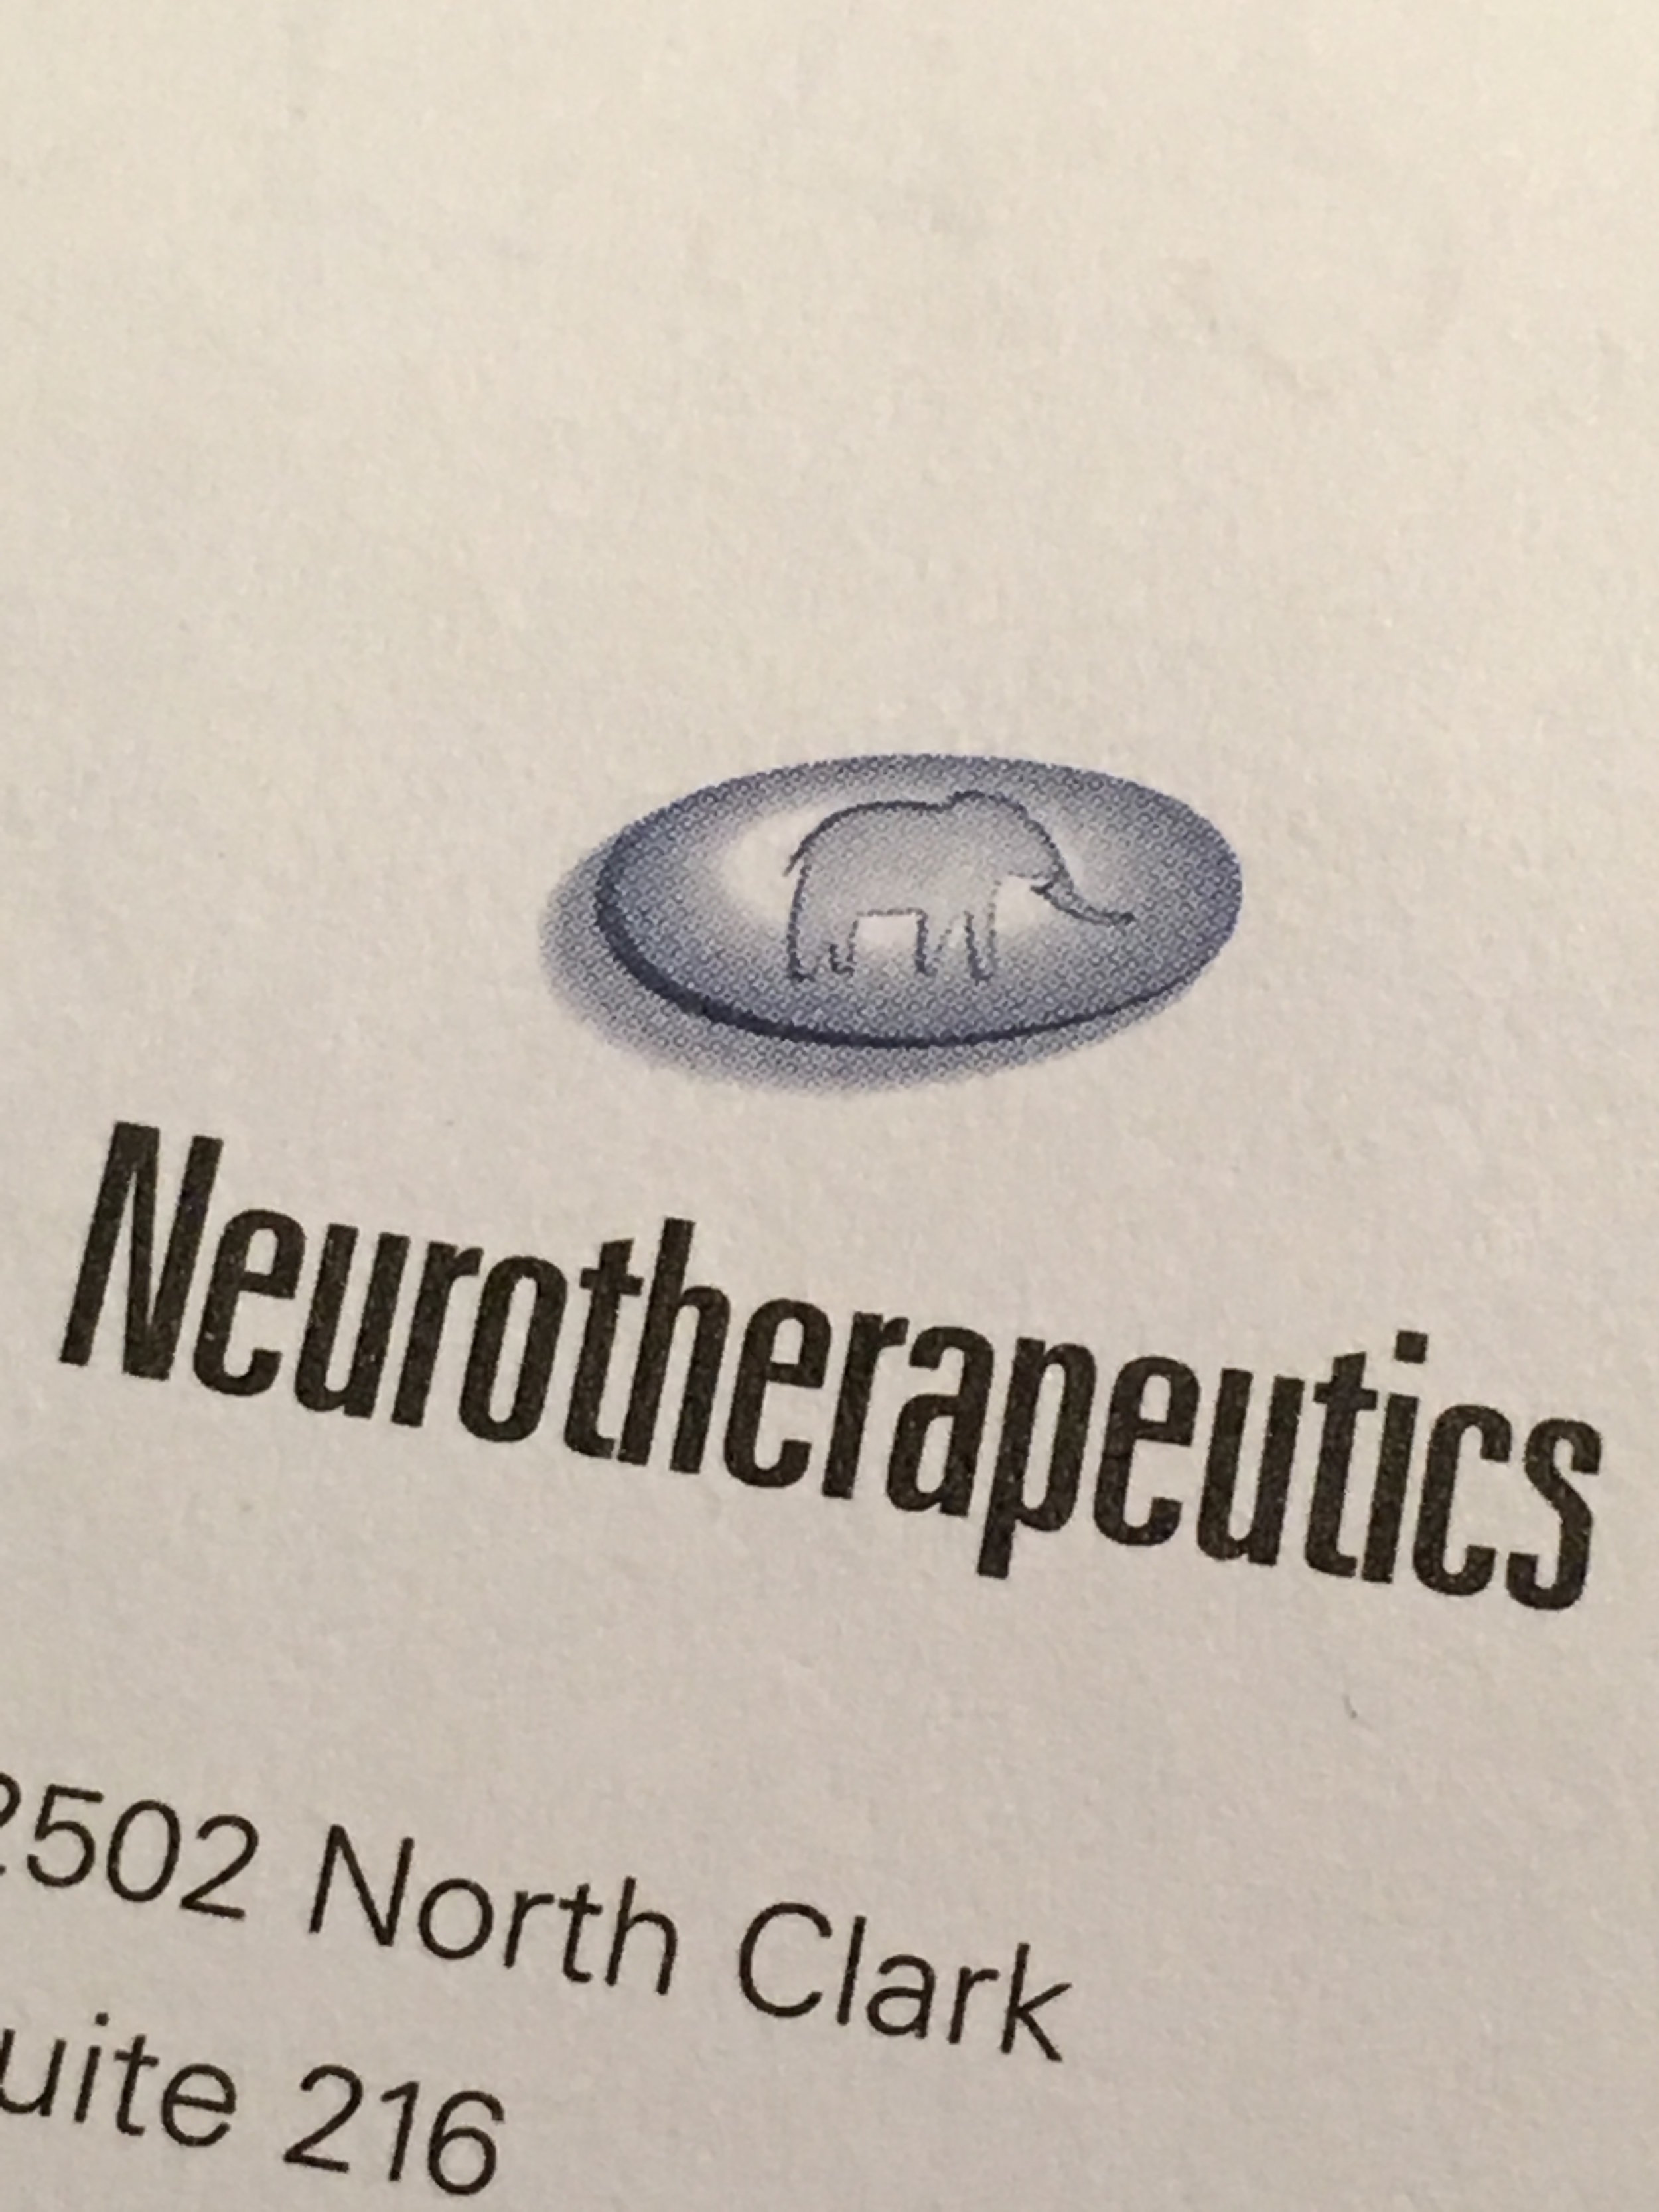 neurotherapeutics logo.jpg